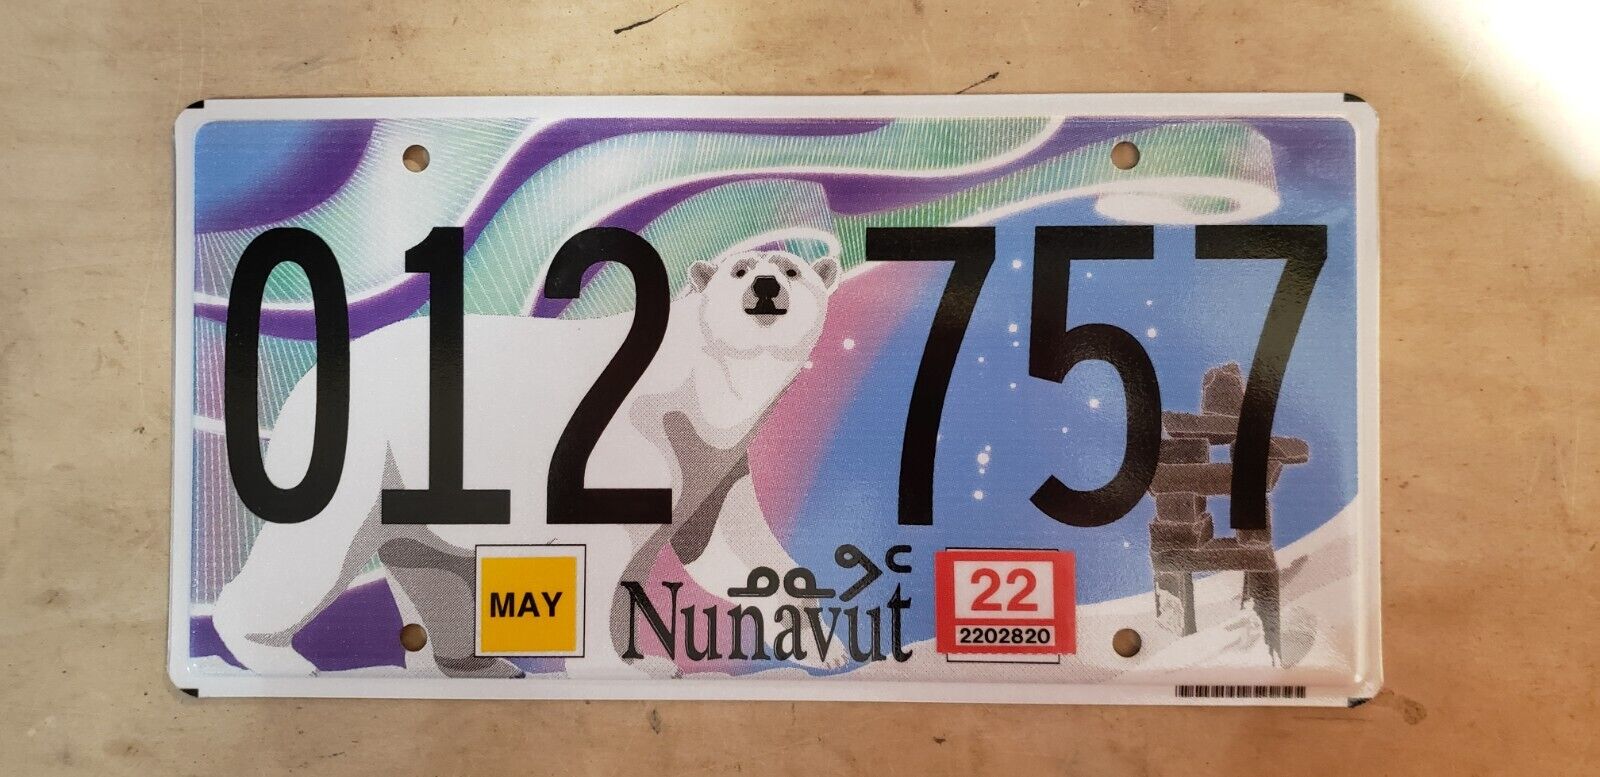 Rare Nunavut Polar Bear Vehicle License Plate